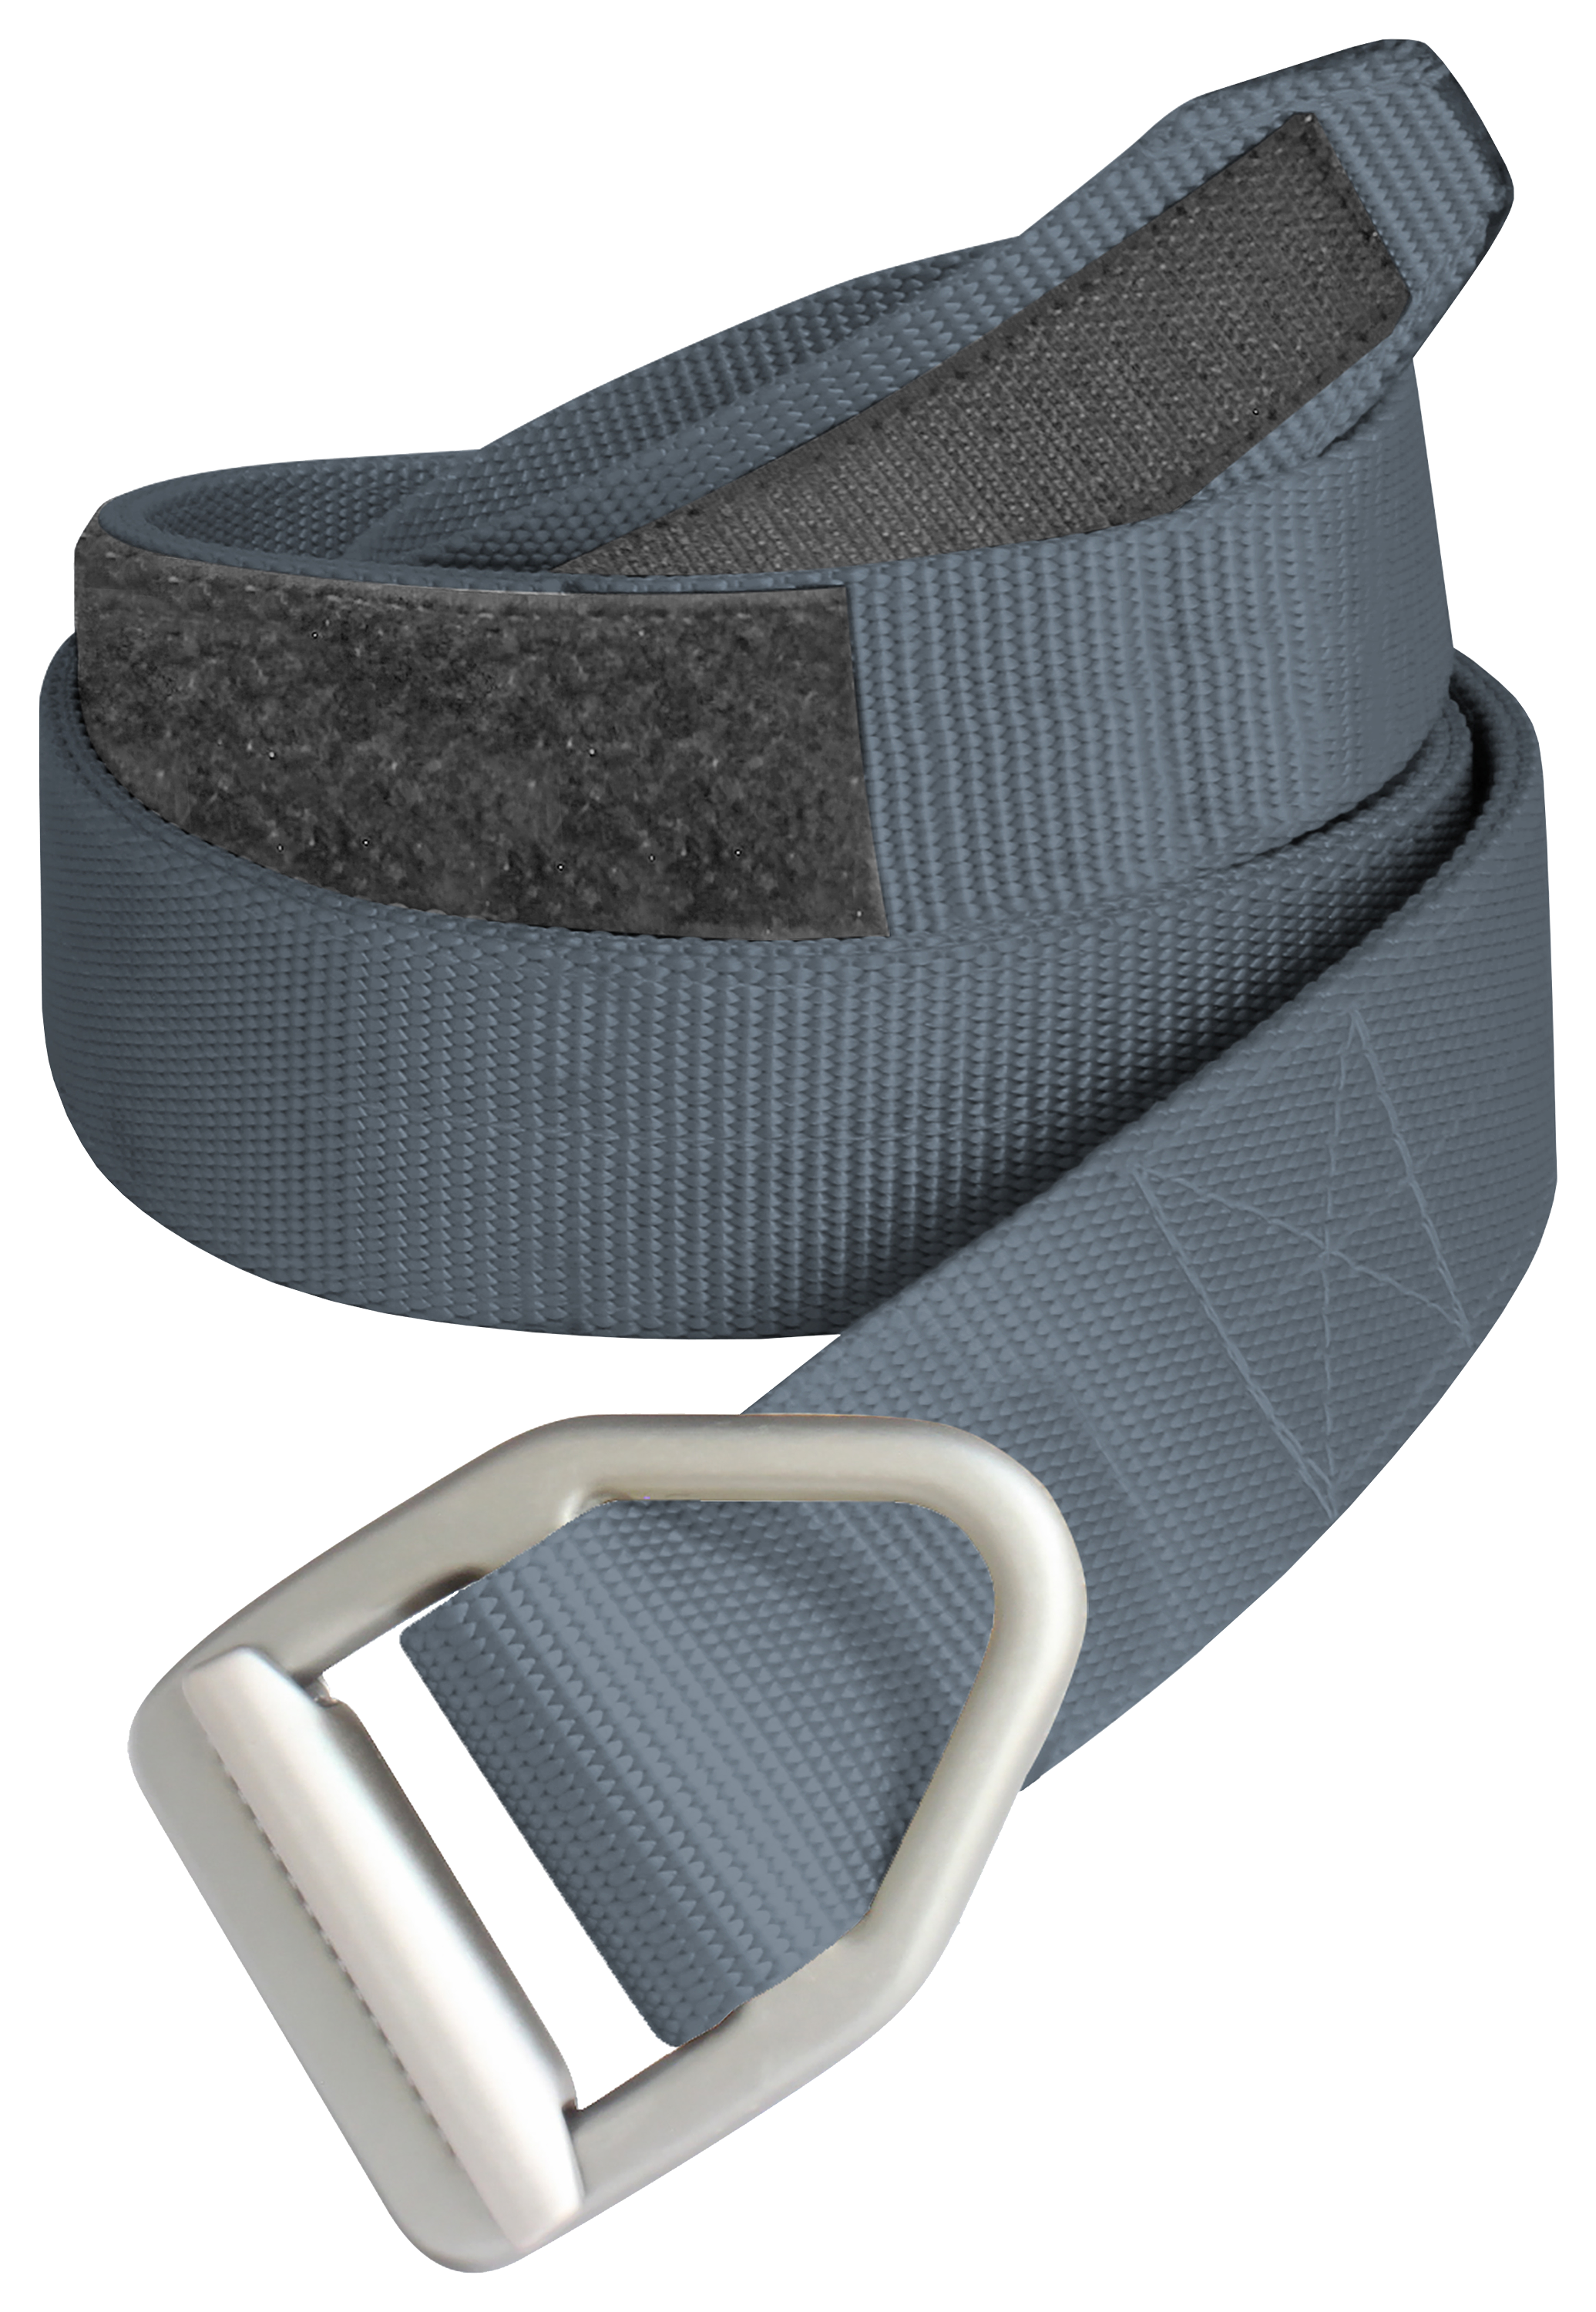 Bison Designs Last Chance Heavy-Duty Belt for Men - Graphite - 2XL